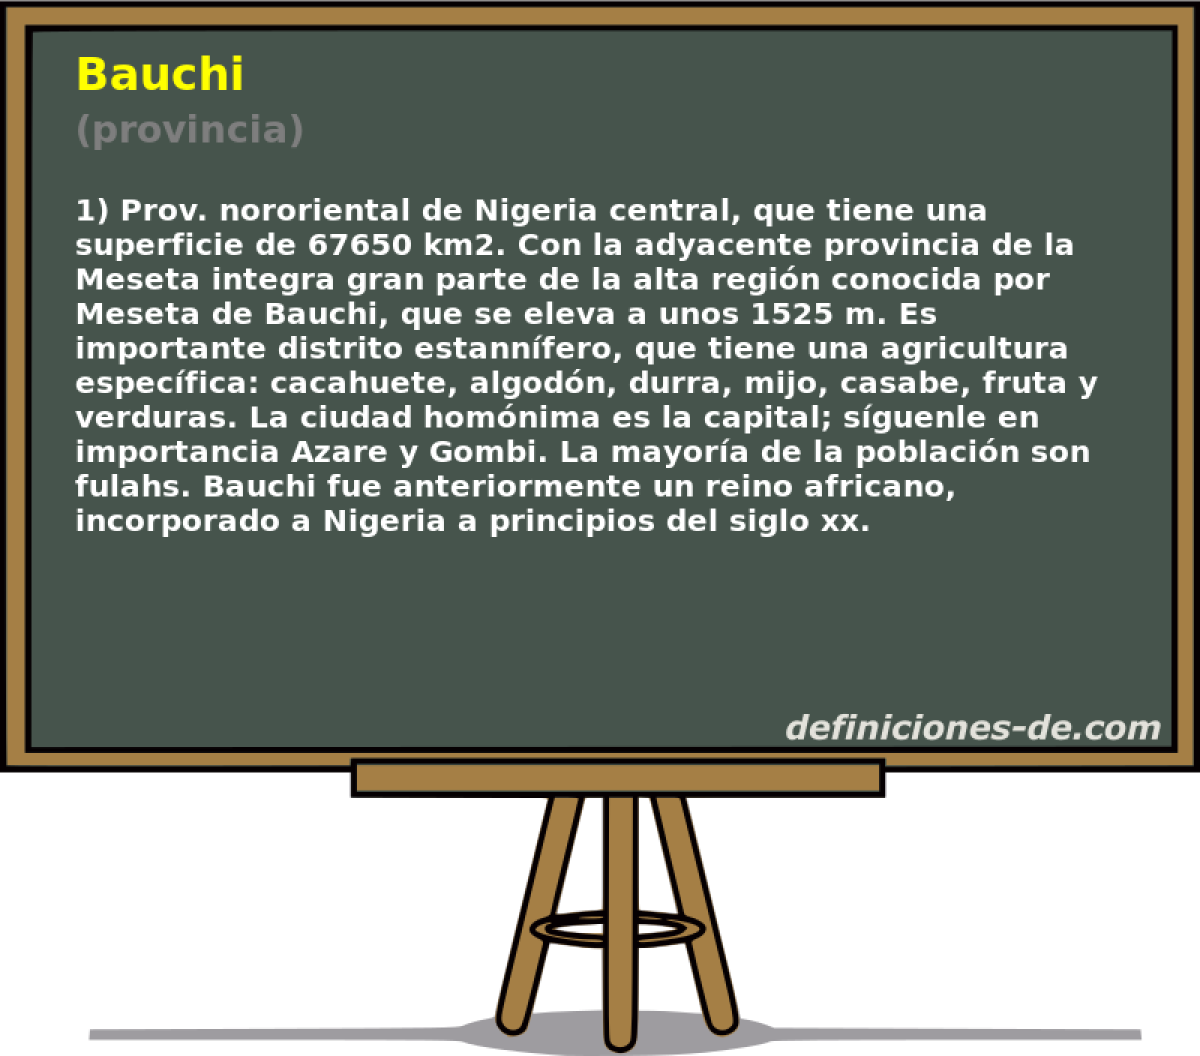 Bauchi (provincia)